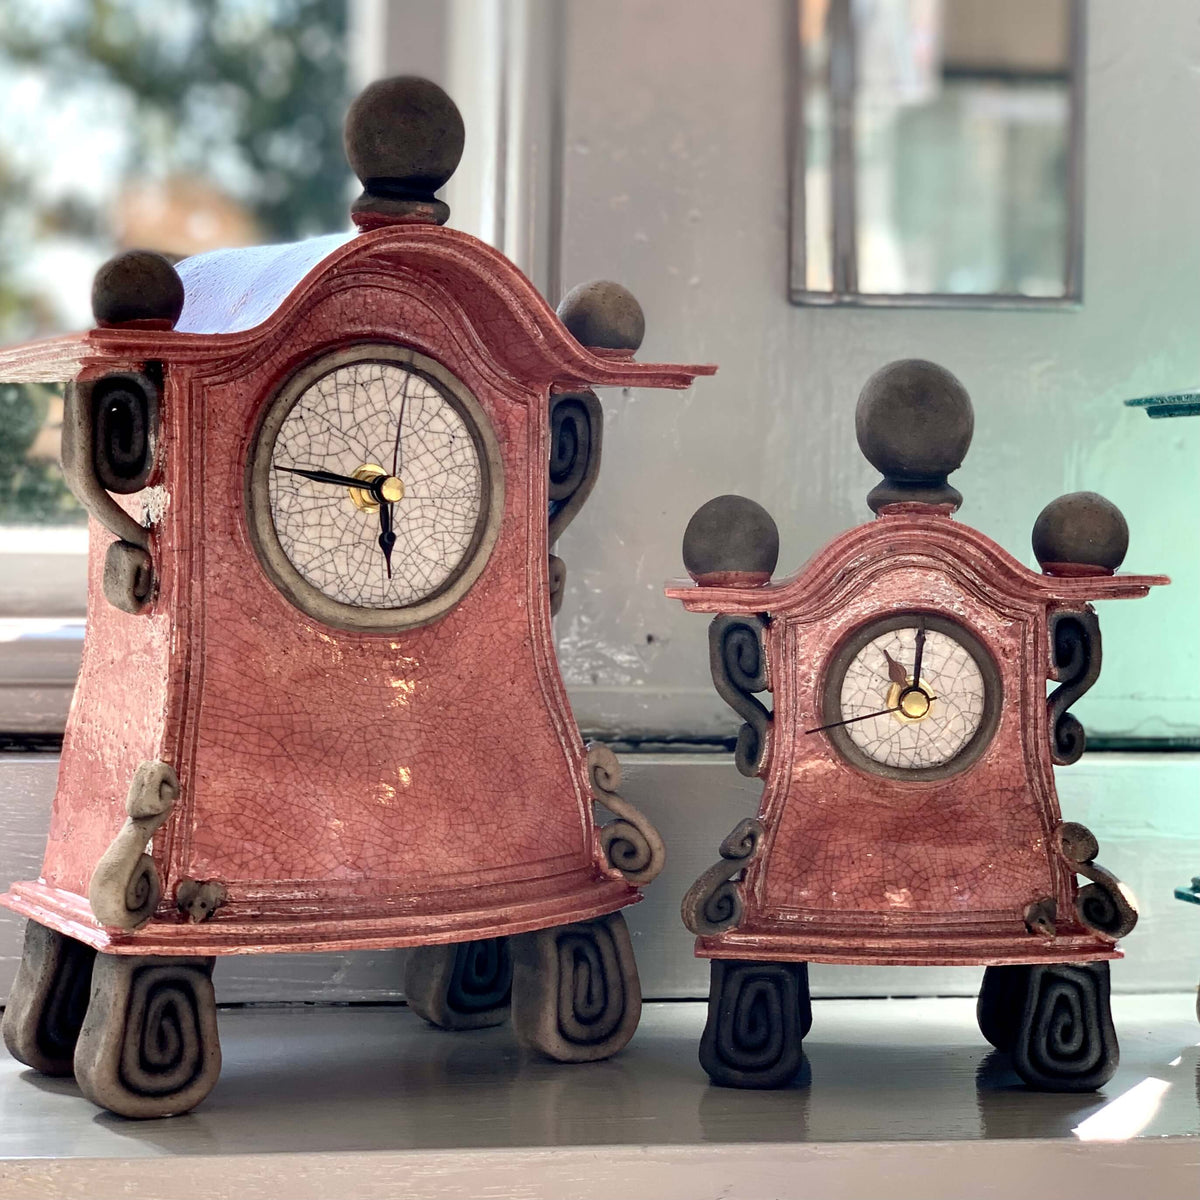 Smaller and larger pink ceramic raku fired clocks.